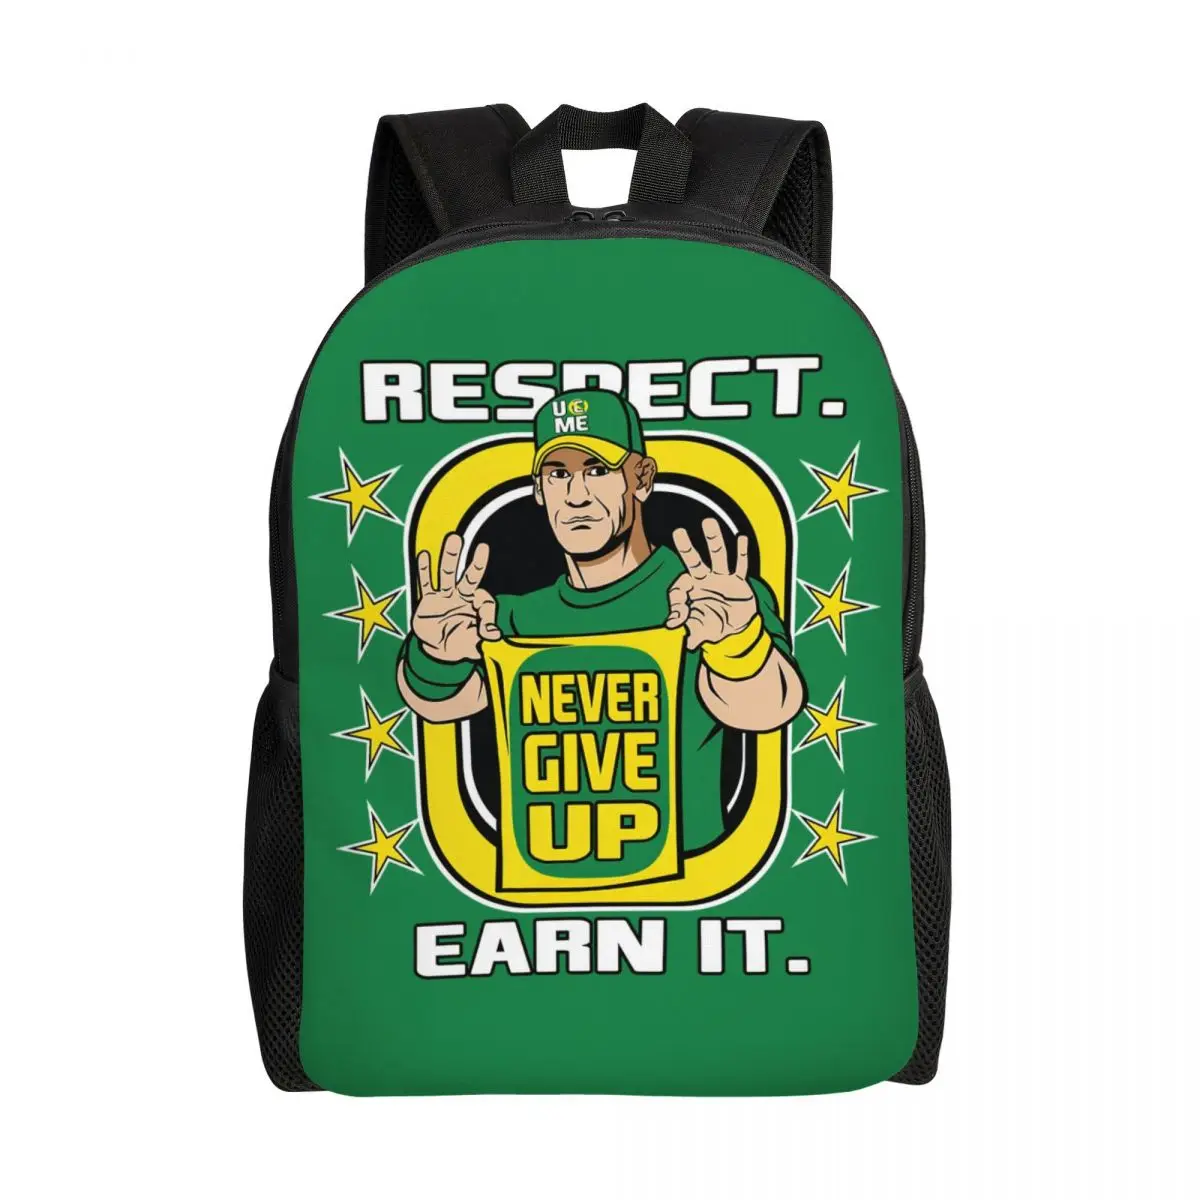 

WWE John Cena Backpacks for Women Men School College Students Bookbag Fits 15 Inch Laptop Never Give Up Bags